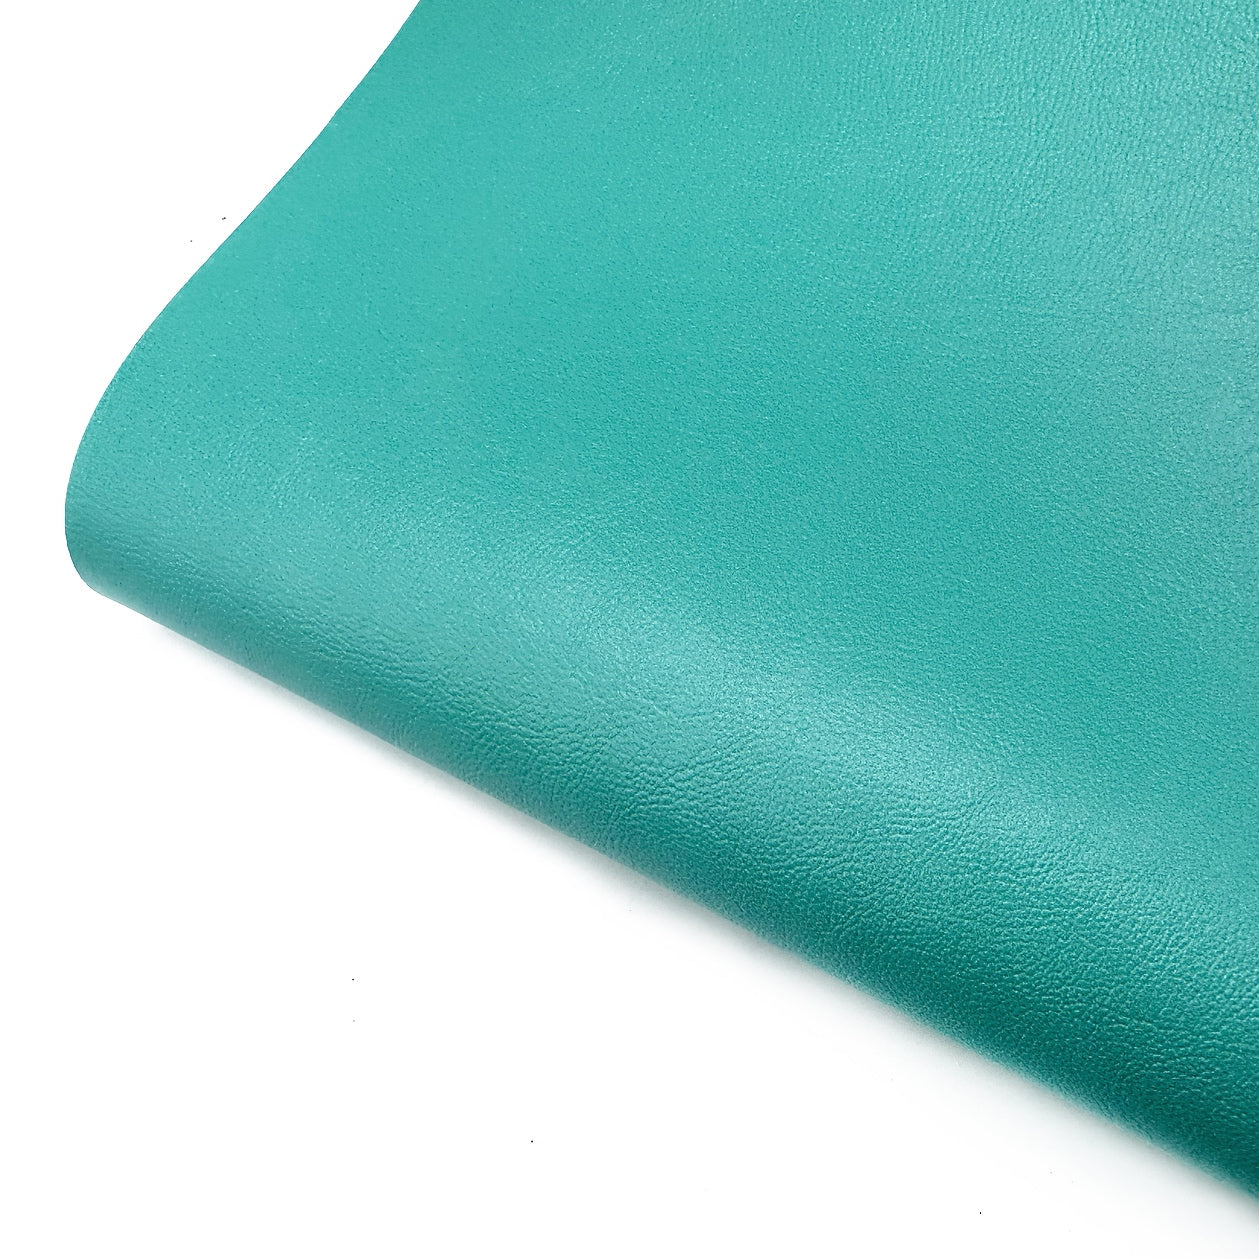 Under the Sea Core Colour Premium Faux Leather Fabric Sheets